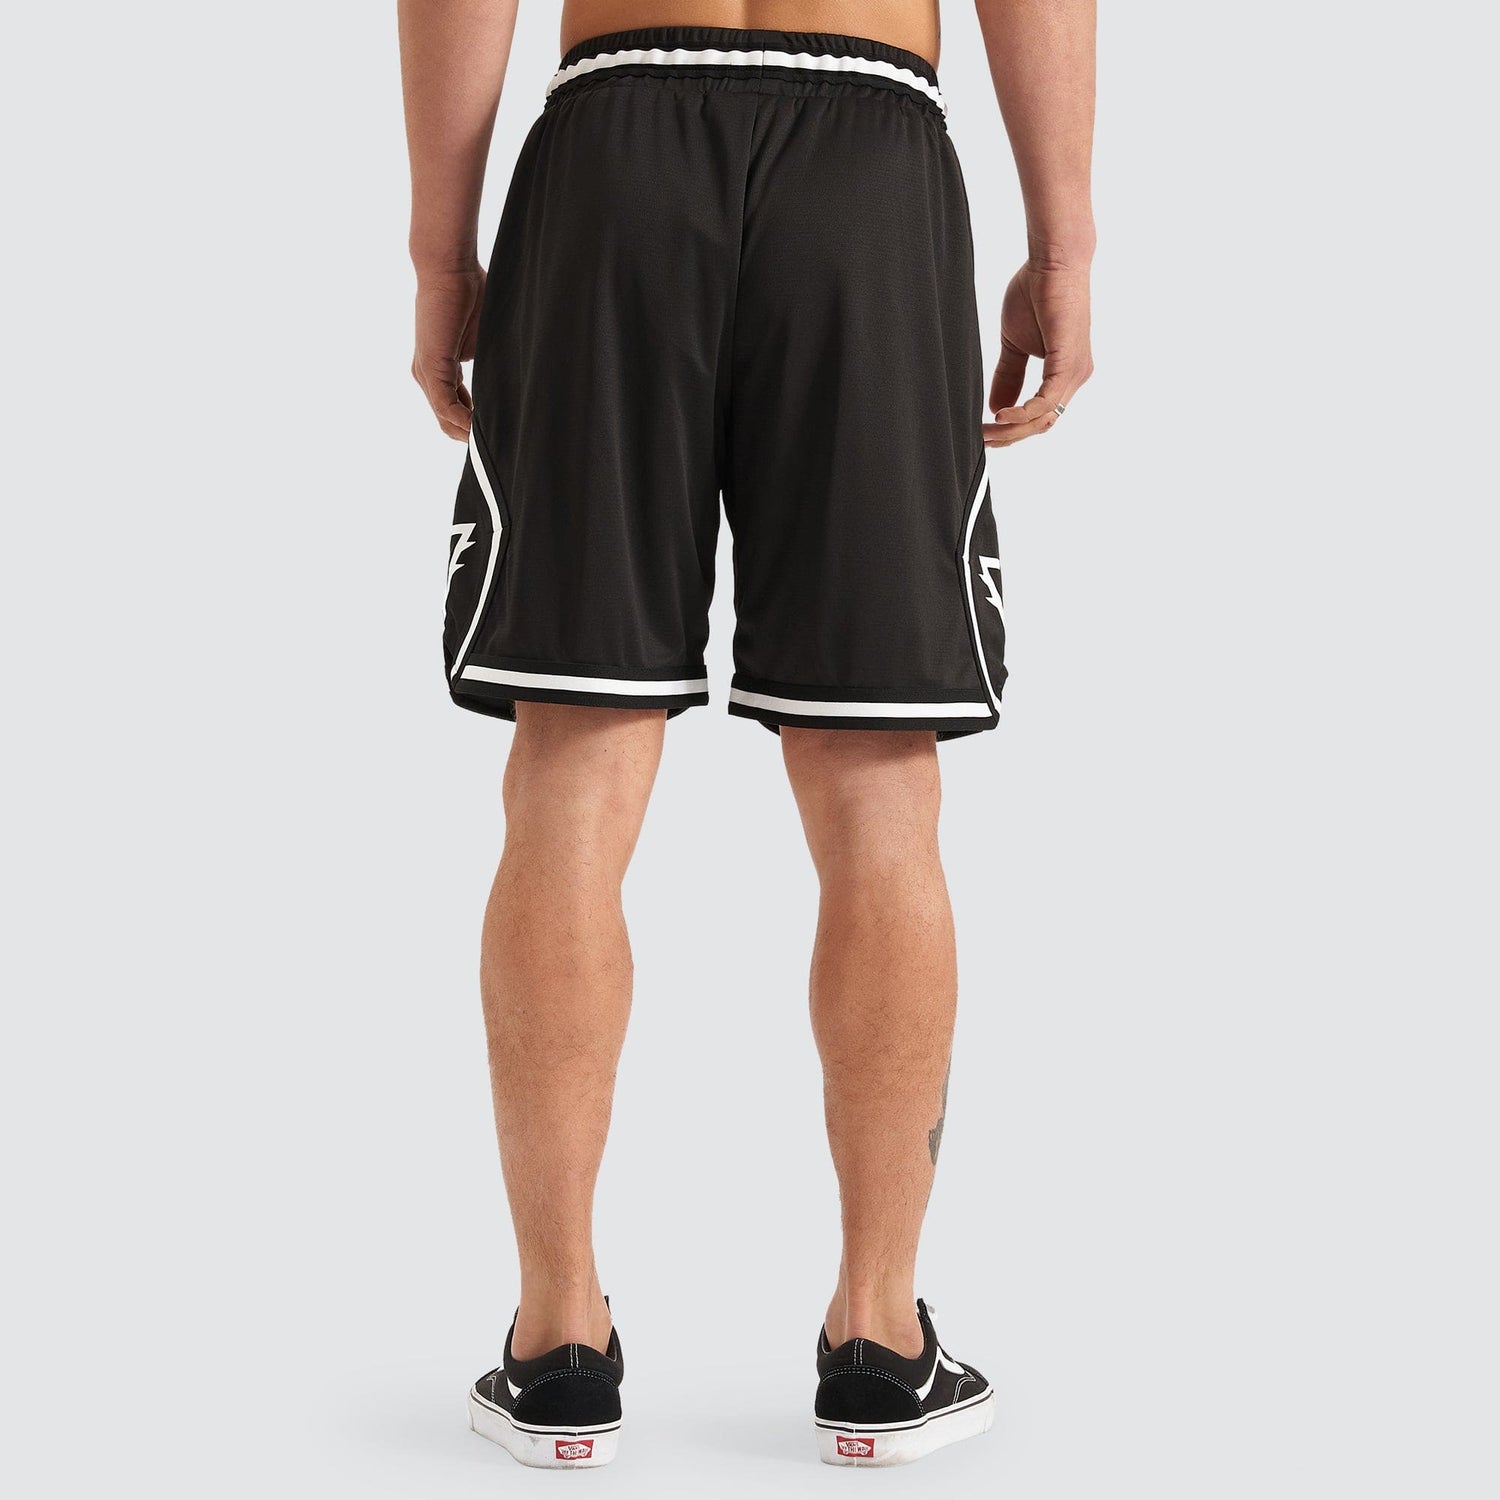 Overdraw Basketball Shorts Jet Black